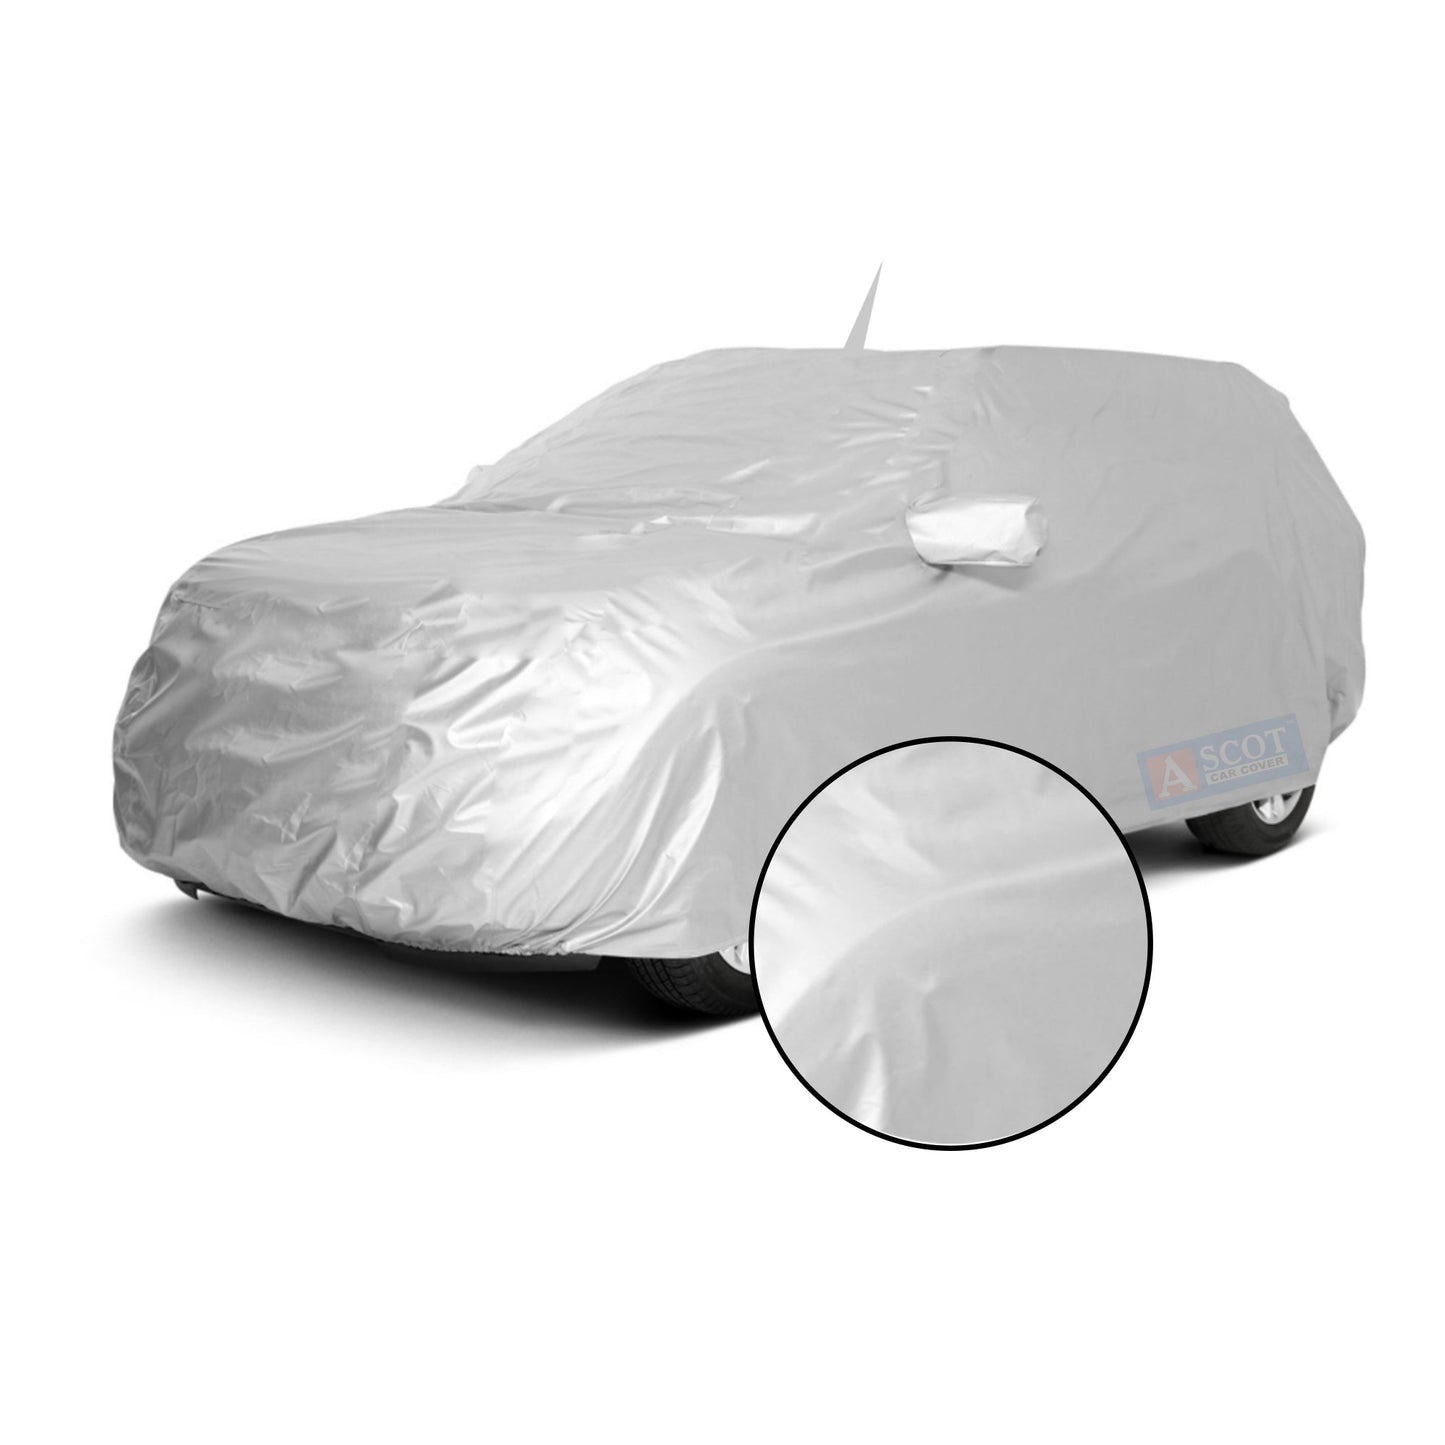 Ascot Maruti Suzuki Ertiga 2012-2018 Model Car Body Cover Dust Proof, Trippel Stitched